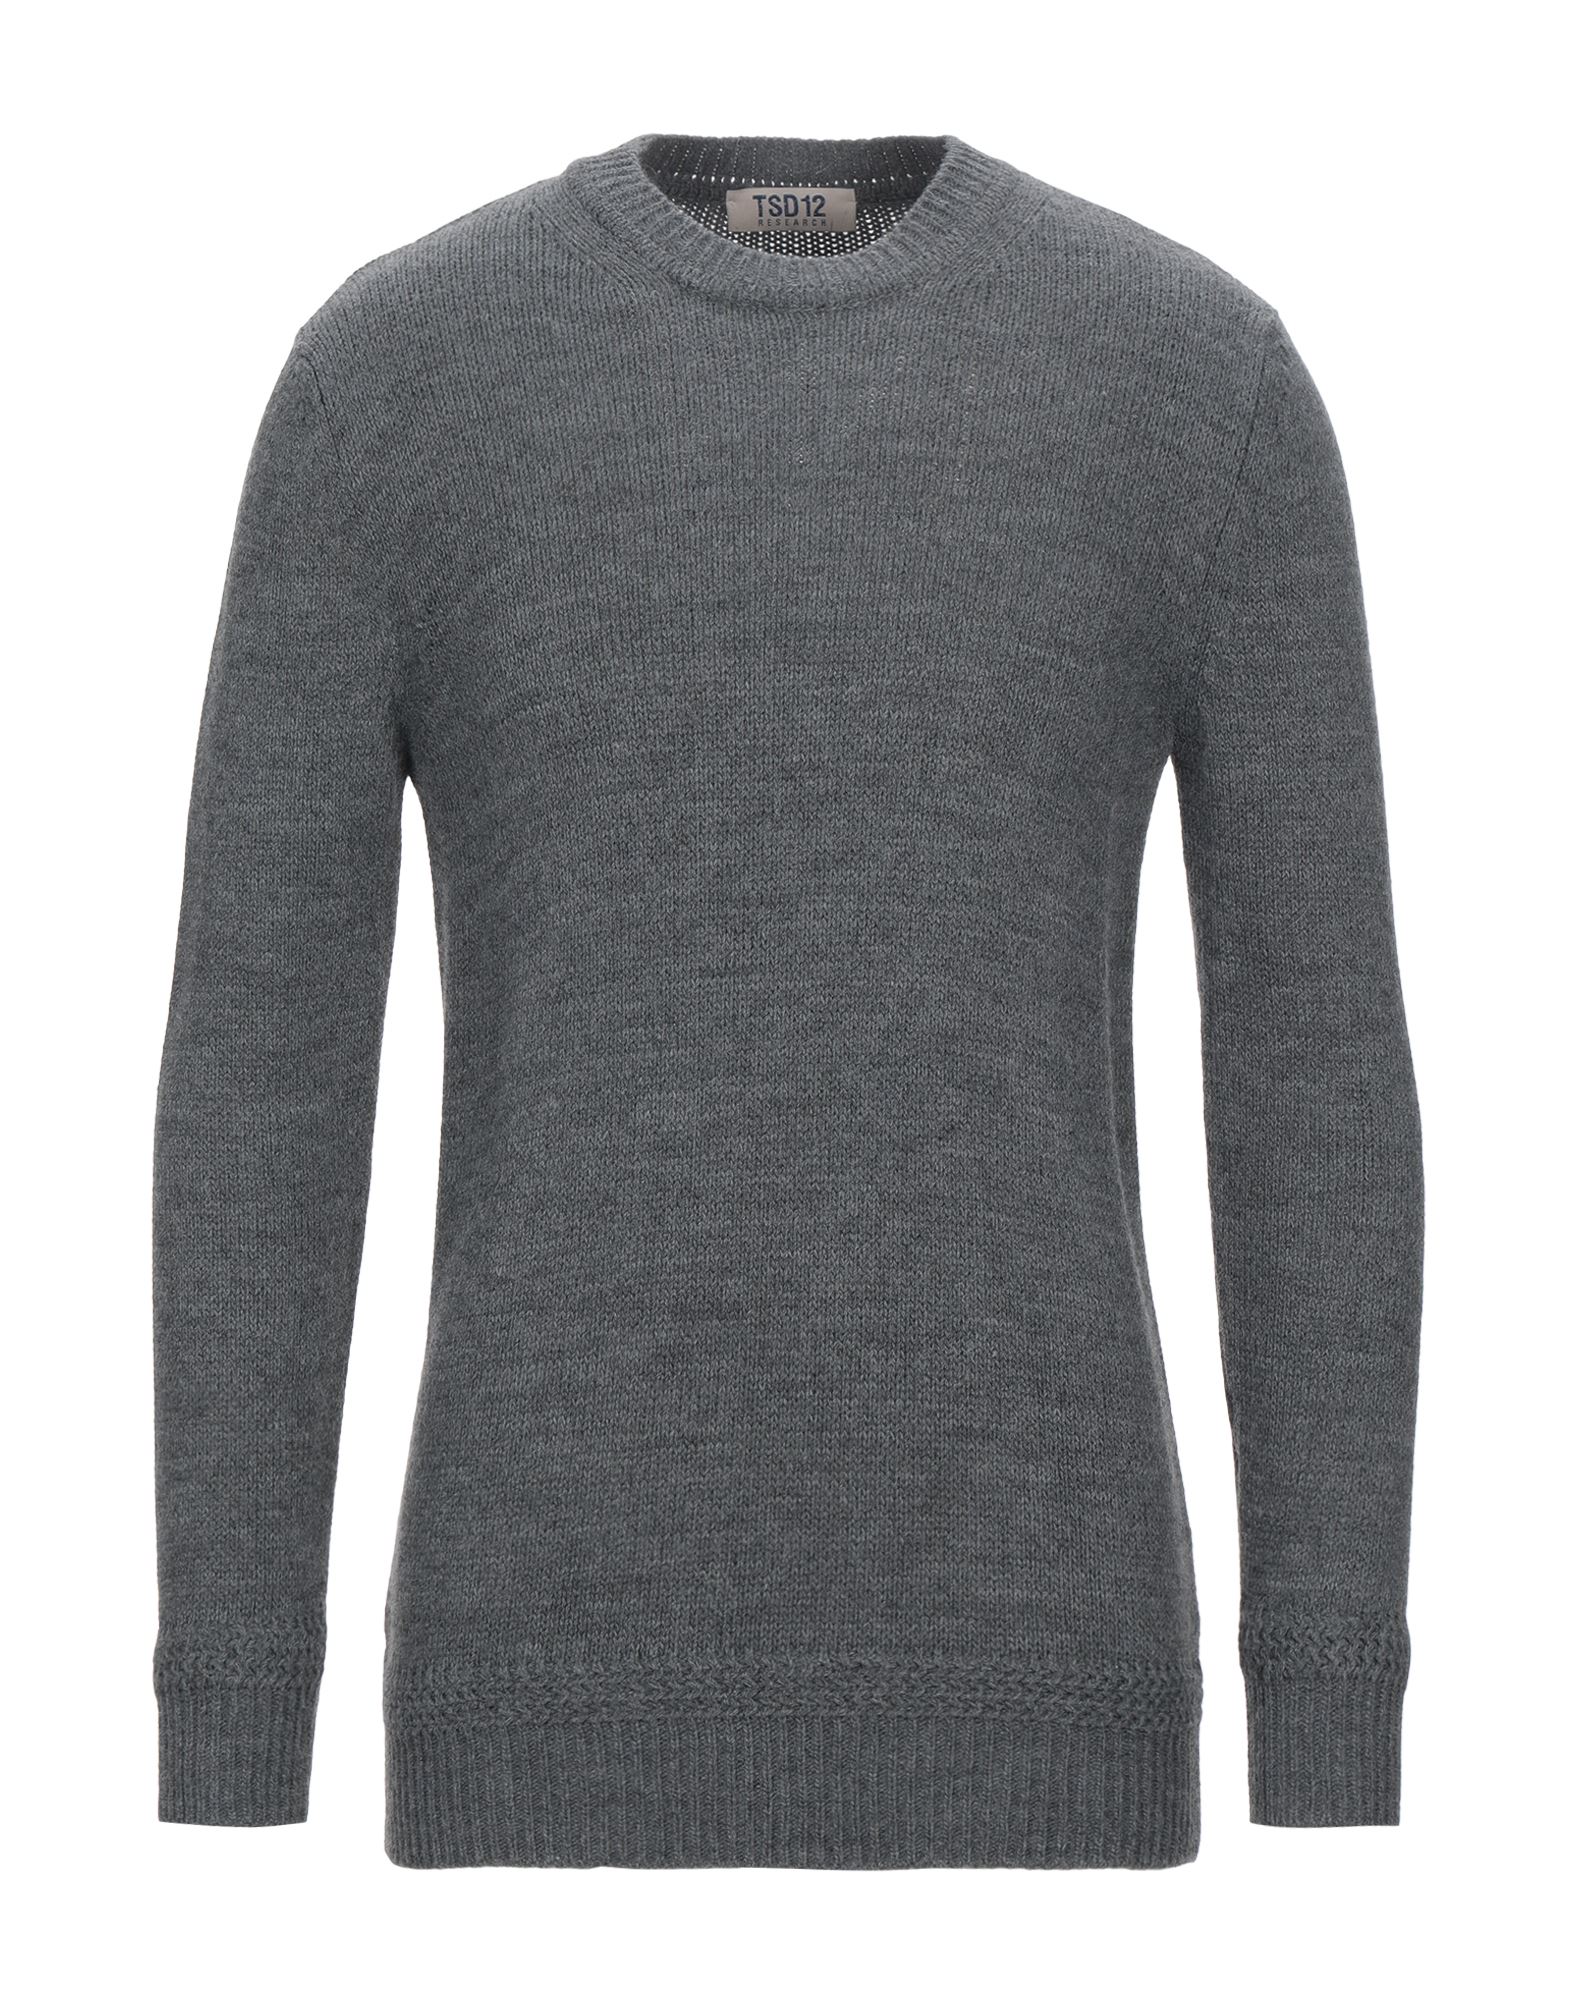 Tsd12 Man Sweater Grey Size Xxl Dralon